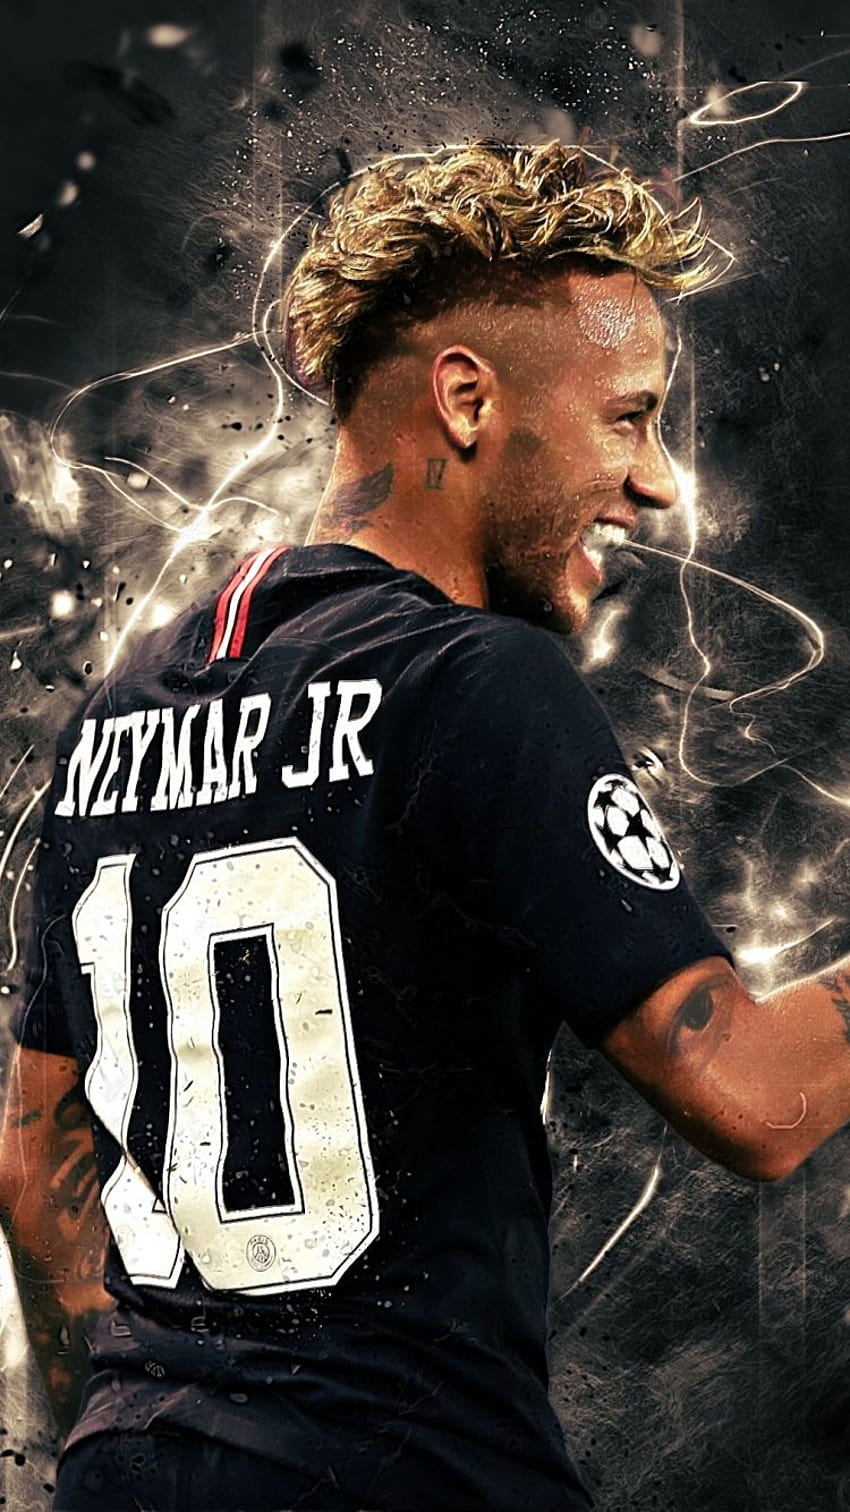 50 4K Neymar Wallpapers  Background Images